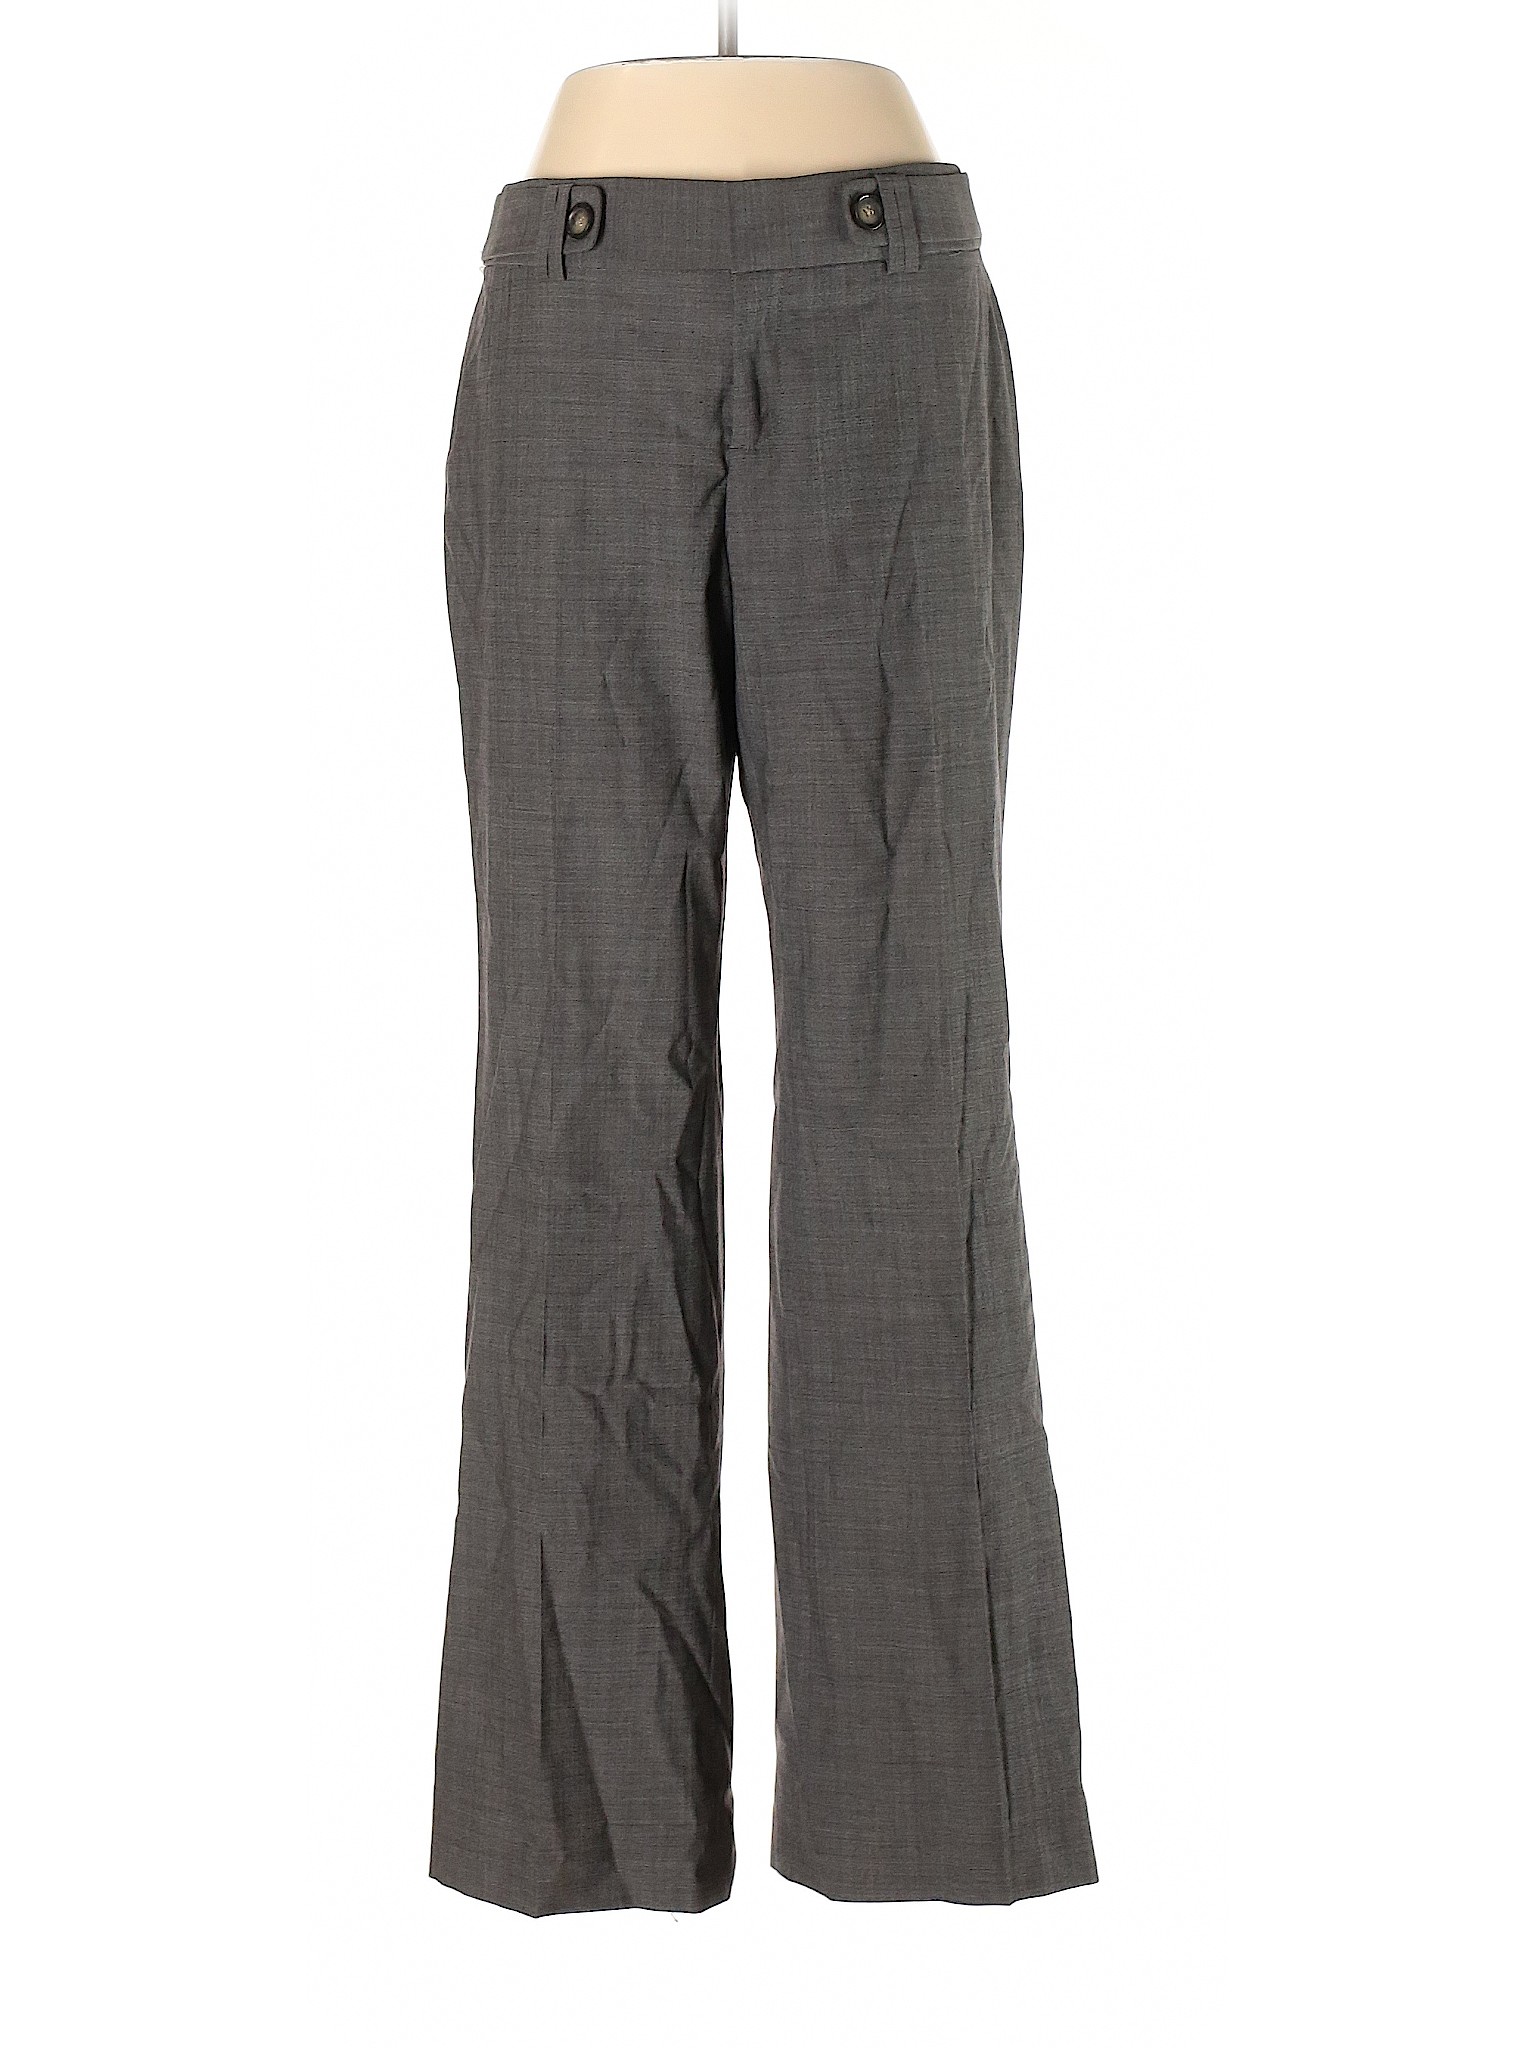 Banana Republic Women Gray Wool Pants 2 | eBay